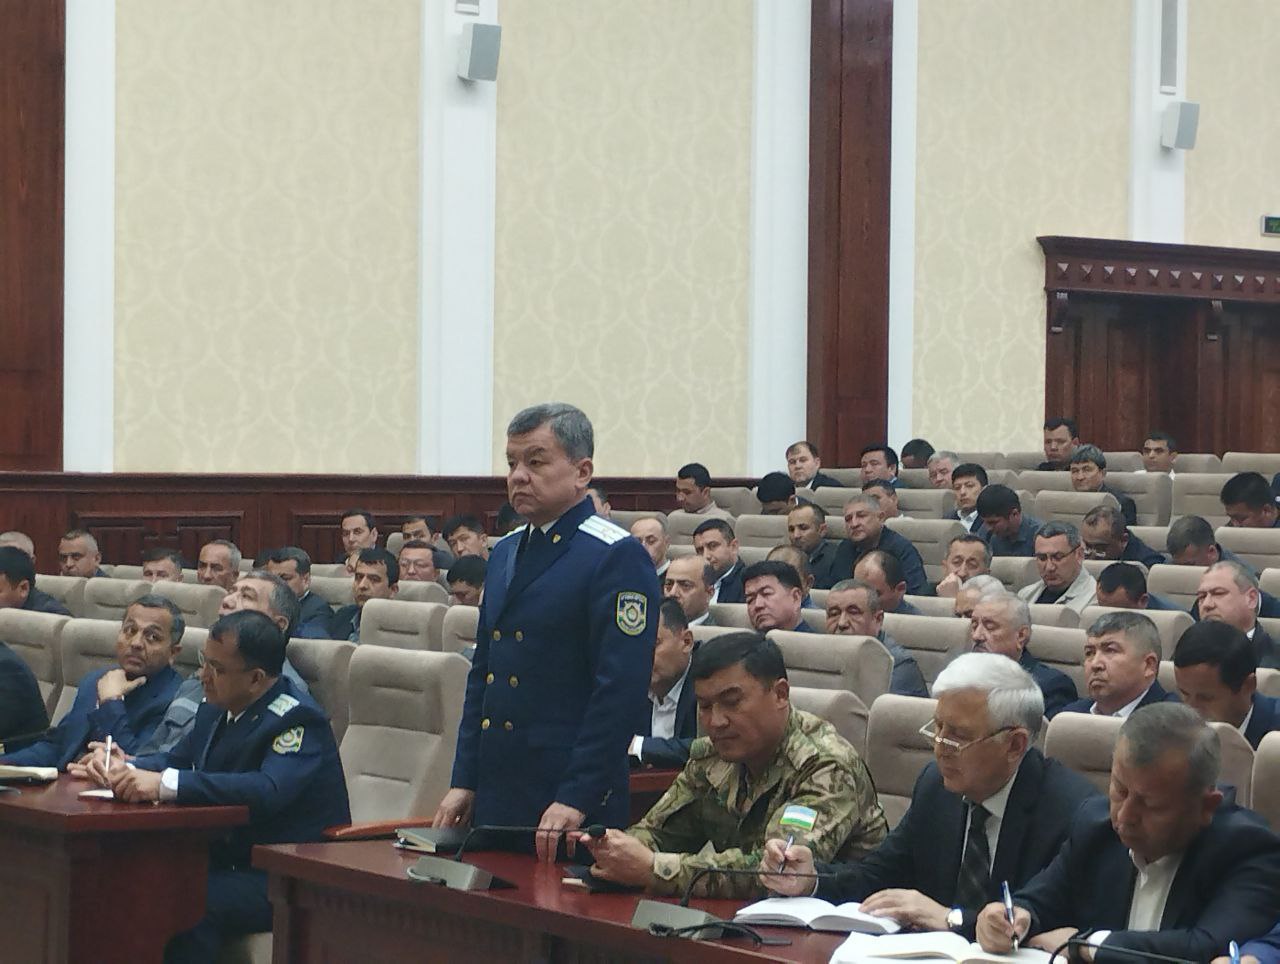 Назначен прокурор Кашкадарьинской области